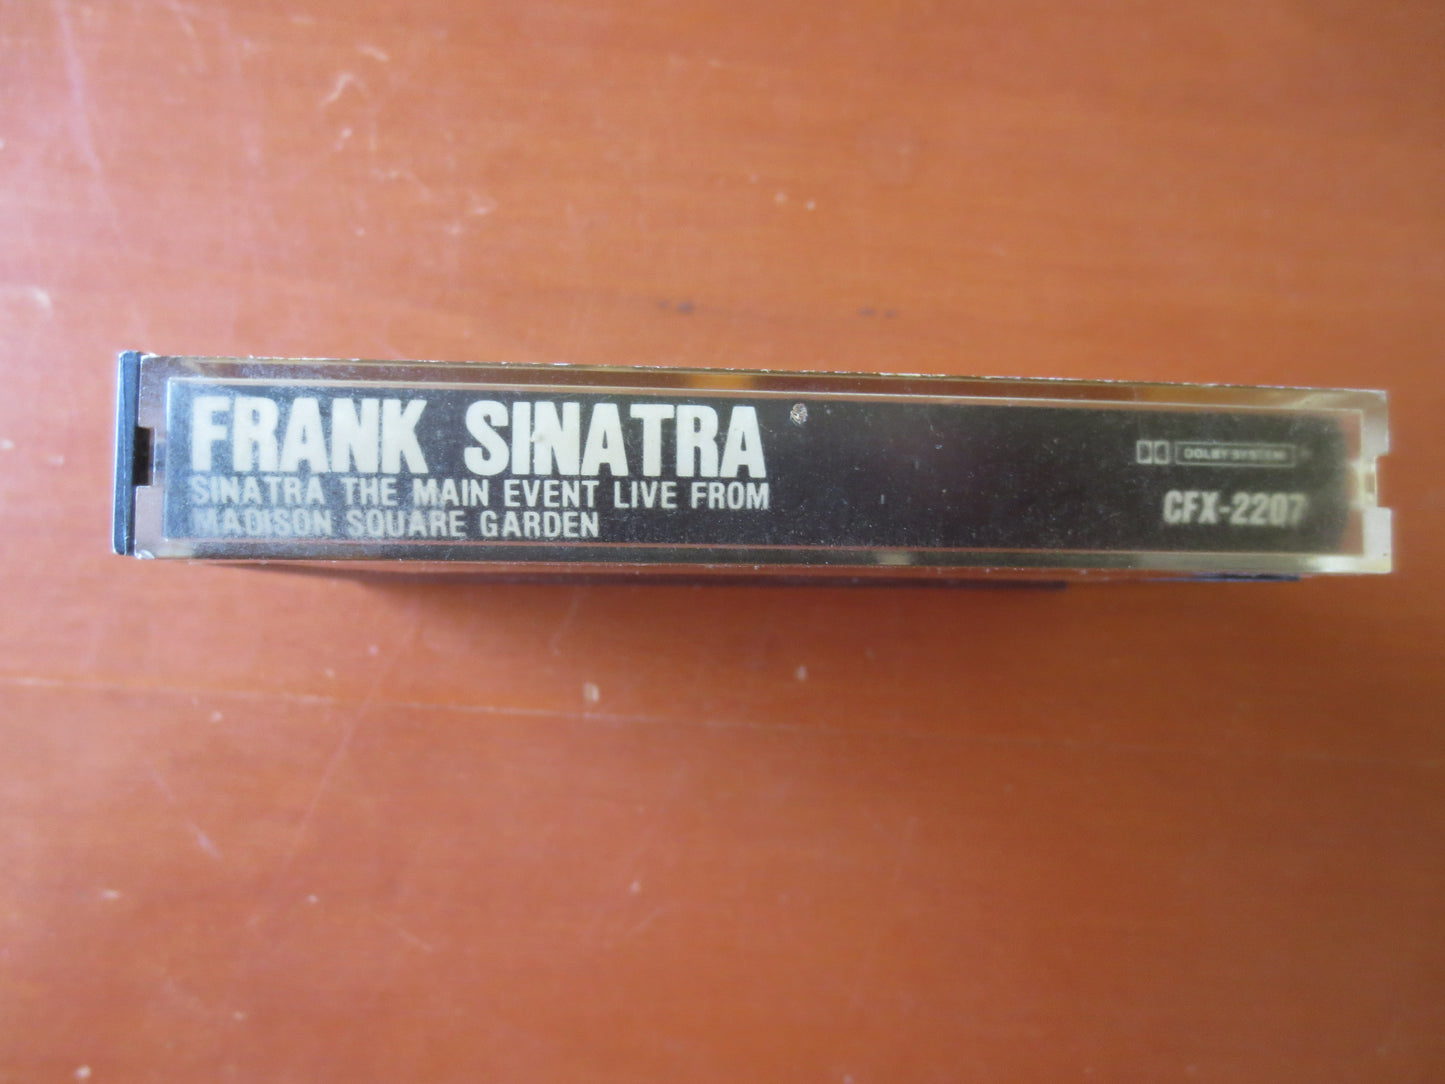 FRANK SINATRA, The Main EVENT, Frank Sinatra Tape, Frank Sinatra Album, Tape Cassette, Jazz Tapes, Cassette, Jazz Cassette